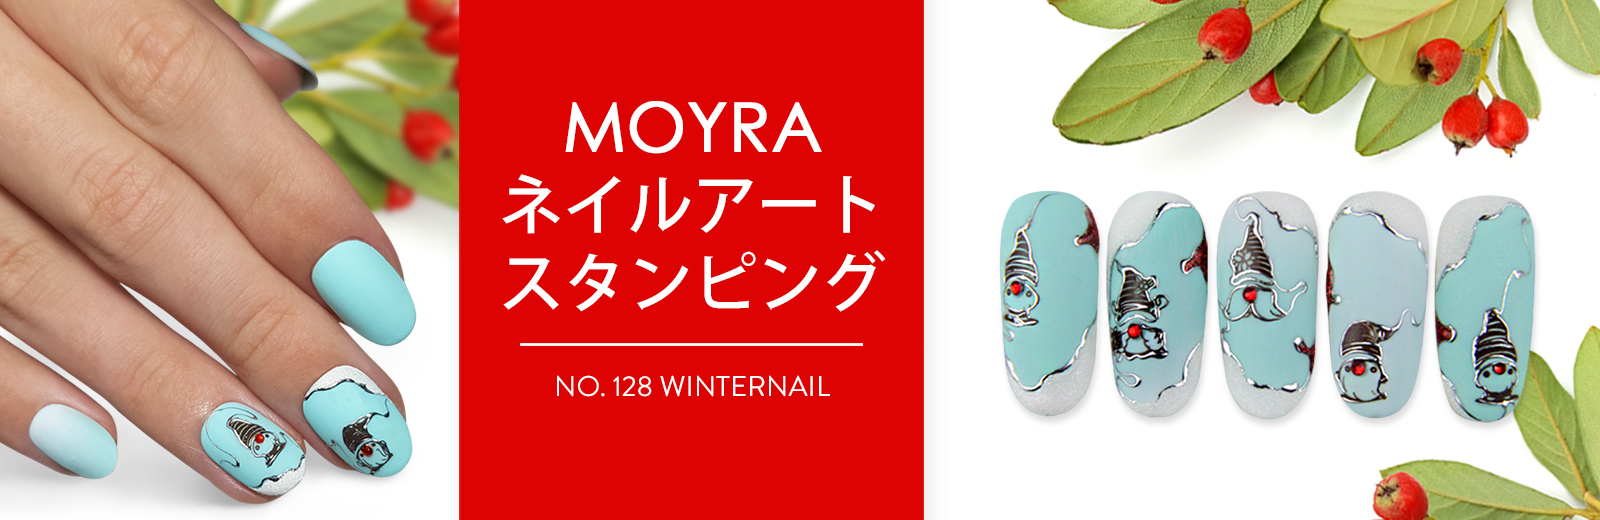 Moyra スタンピングプレート Stamping plate 128 Winternail